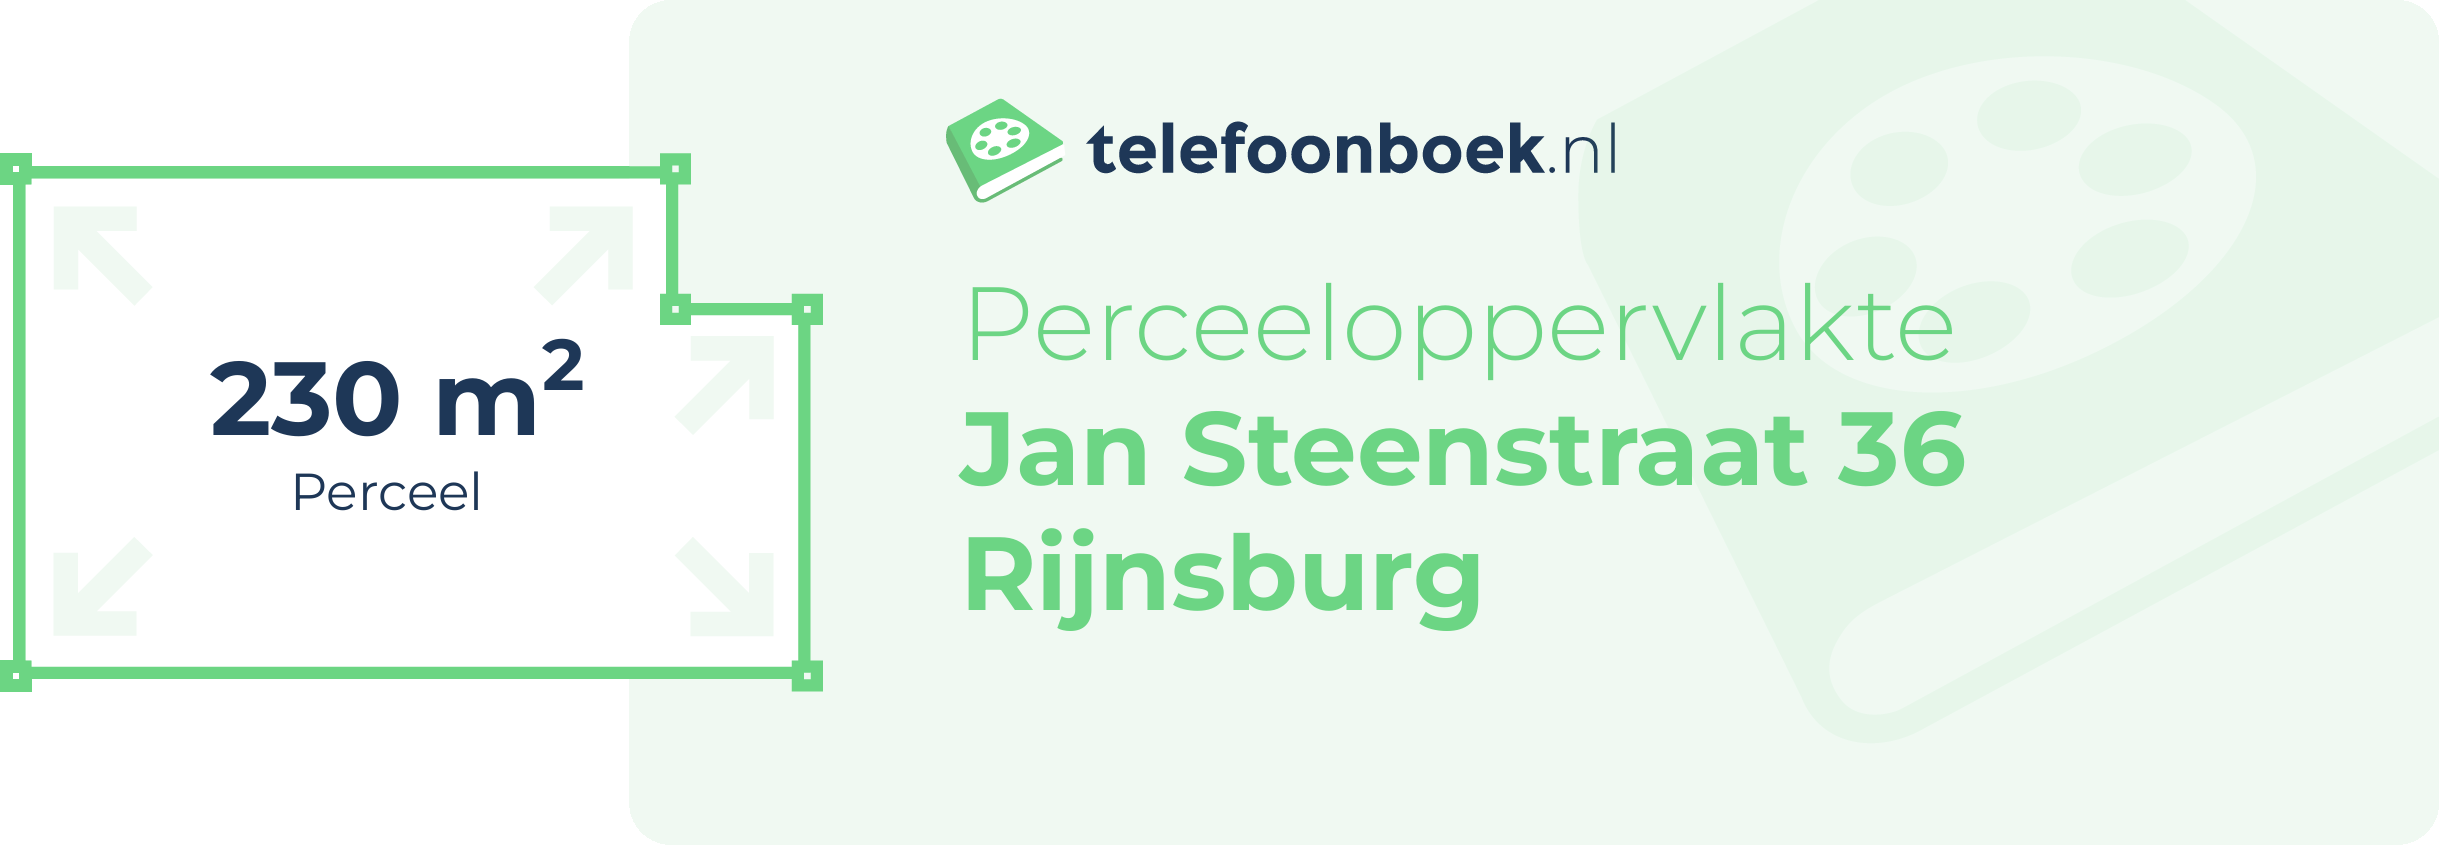 Perceeloppervlakte Jan Steenstraat 36 Rijnsburg